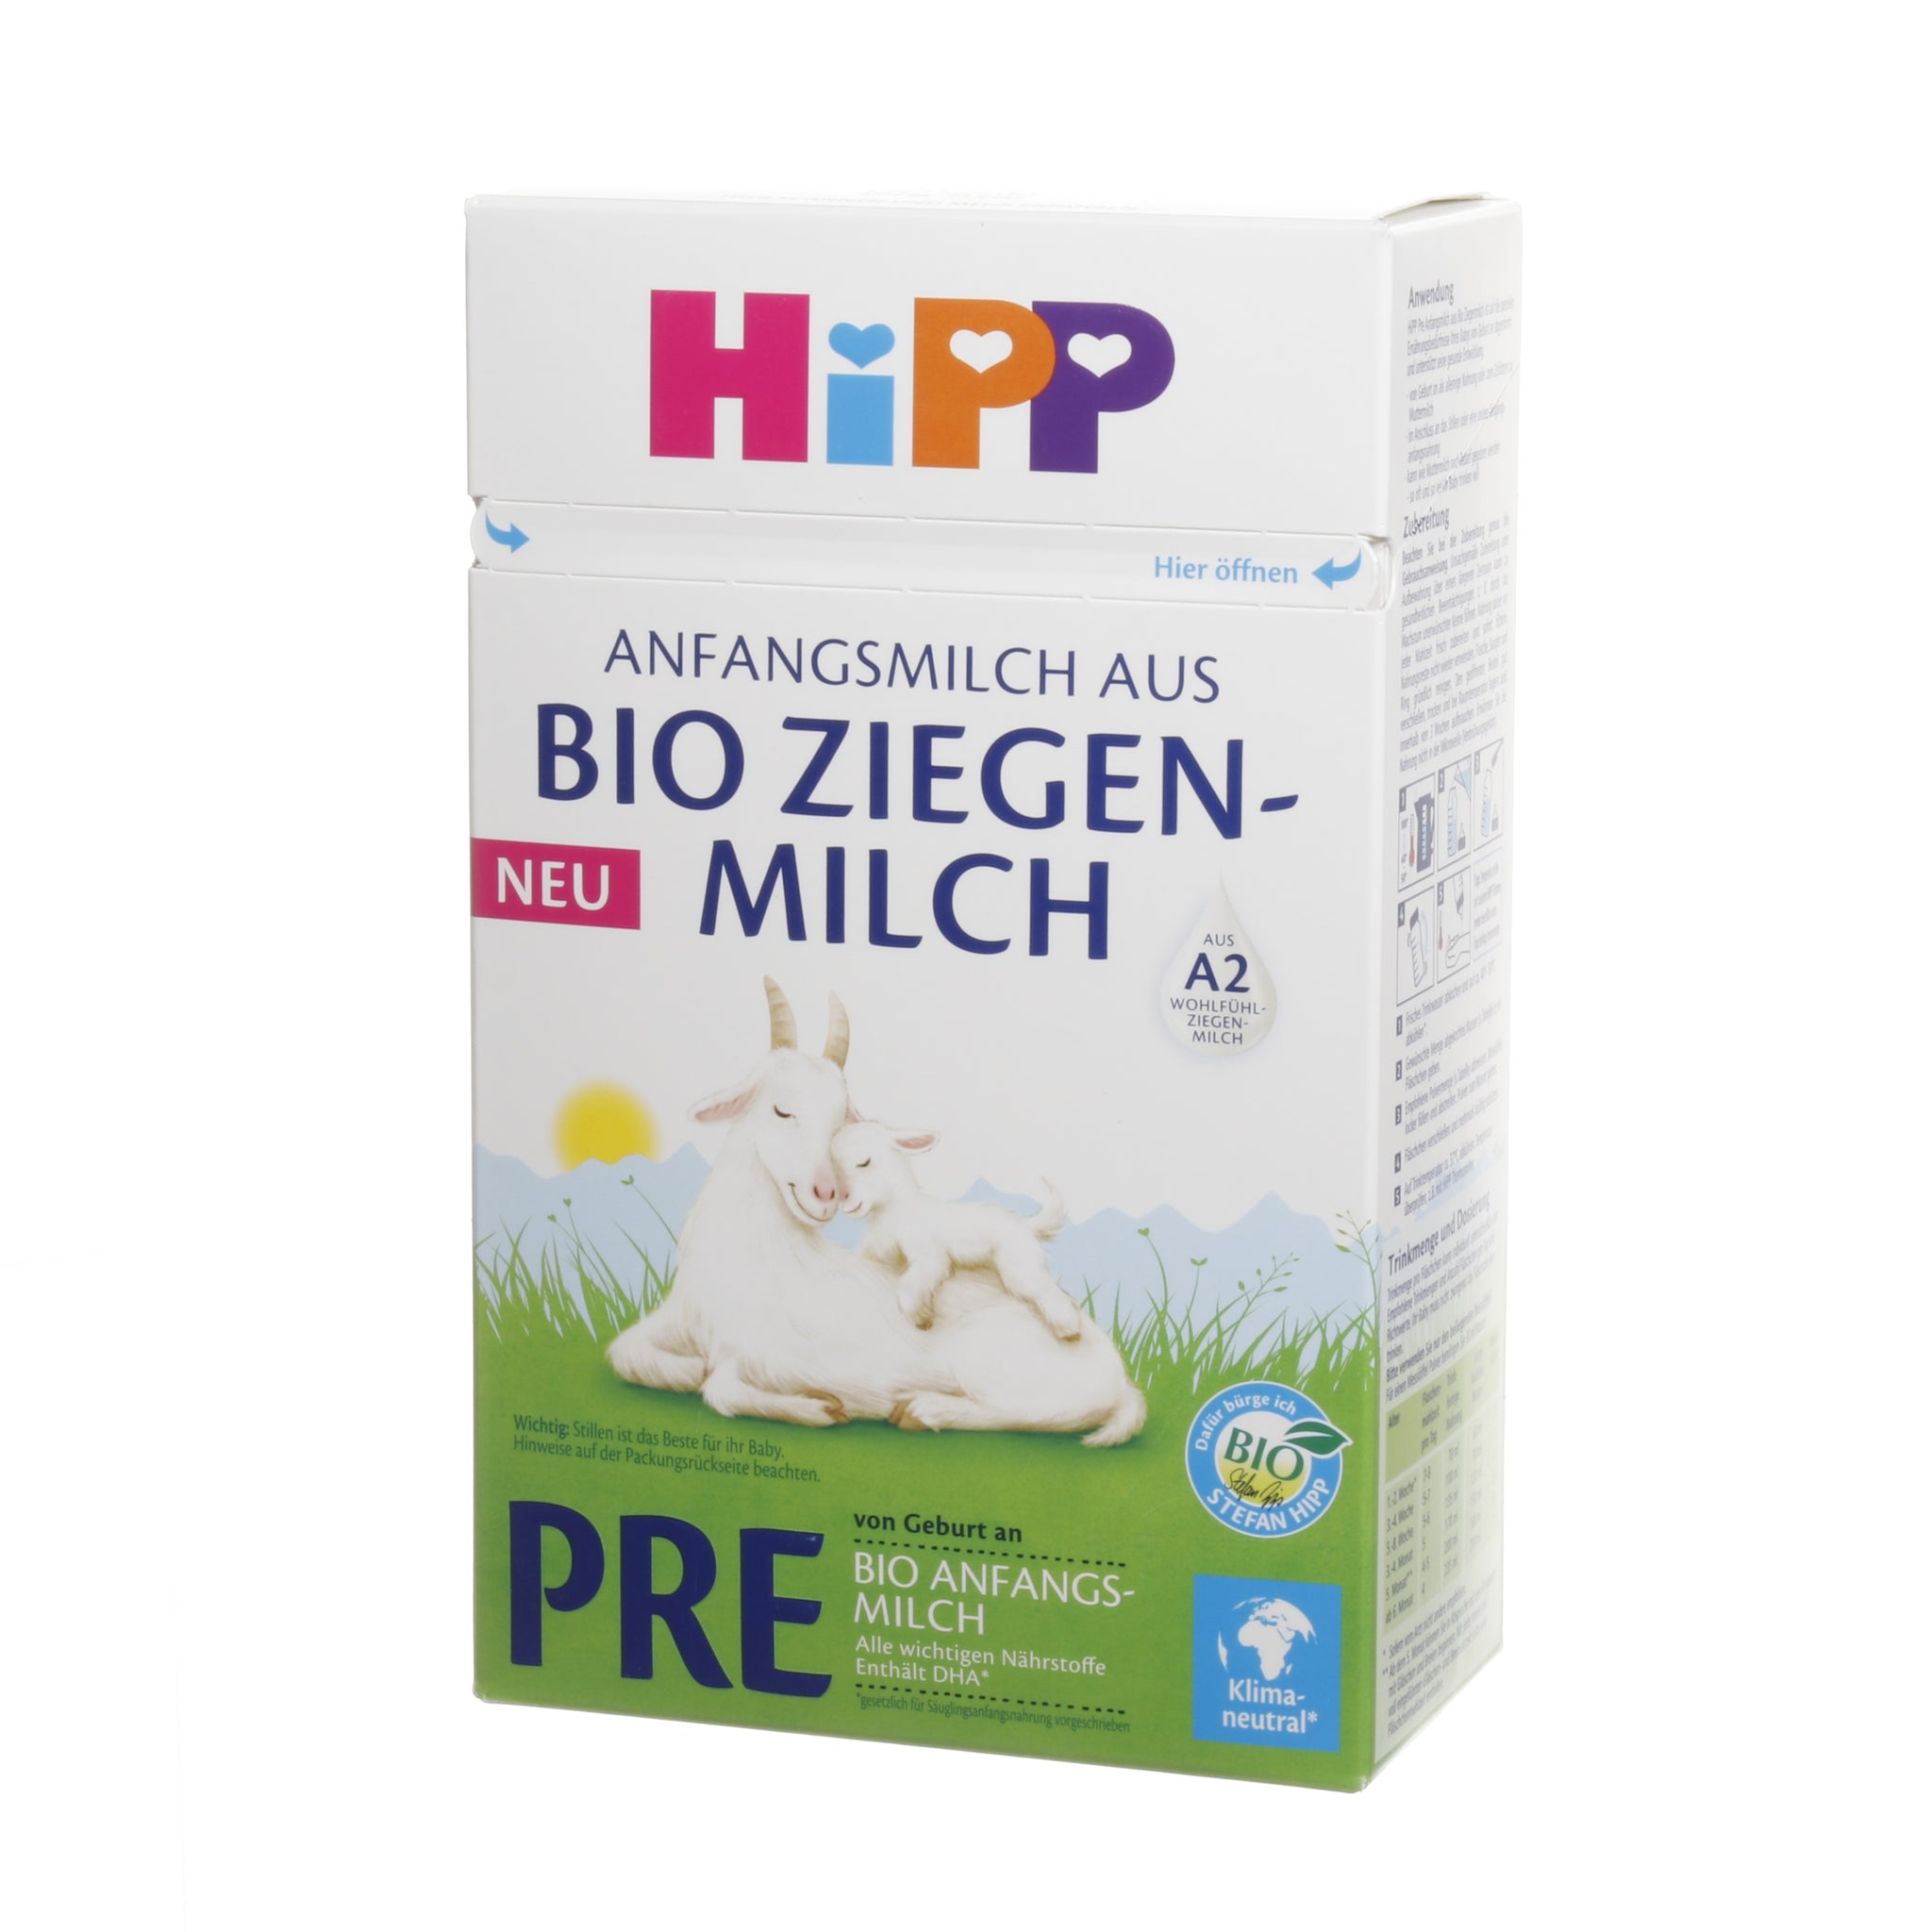 Hipp Pre Starter Milk Made from Organic Goat Milk, 400g